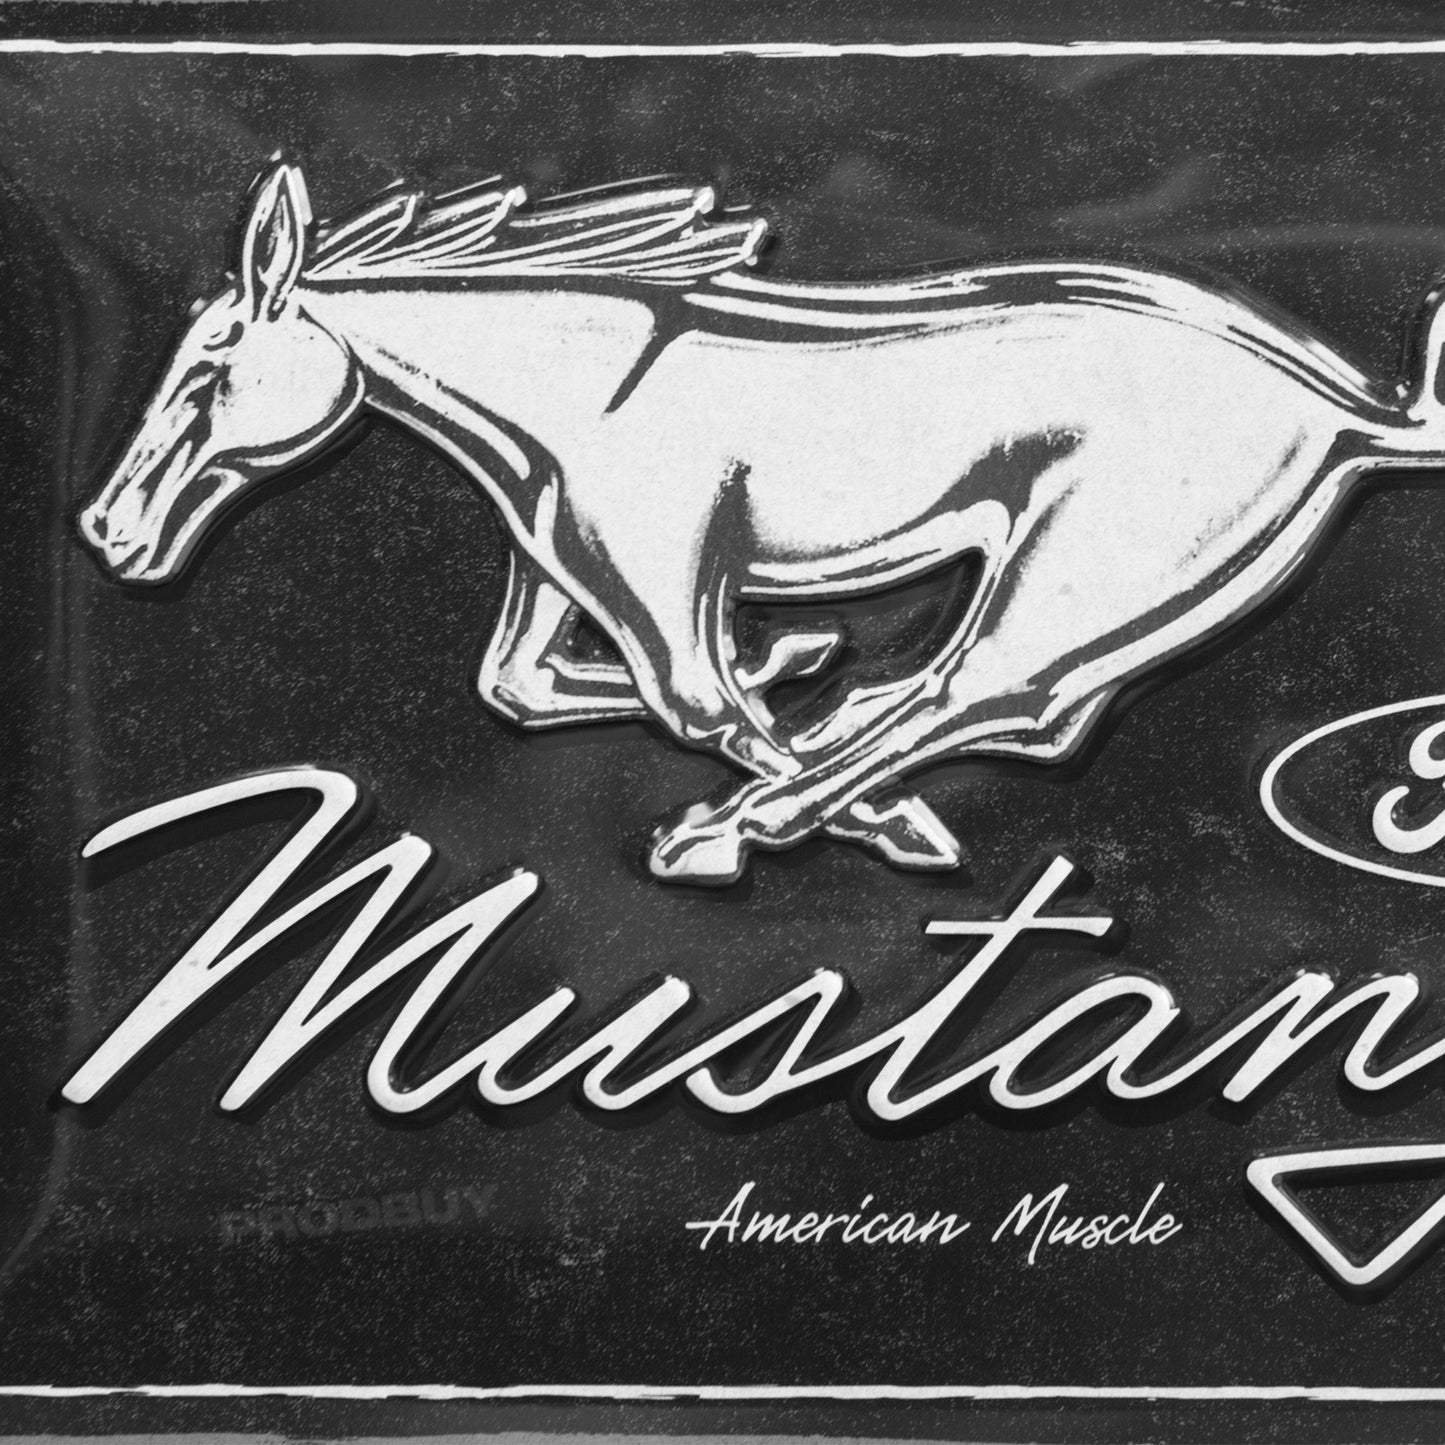 Black Ford Mustang Retro 30cm Metal Wall Sign